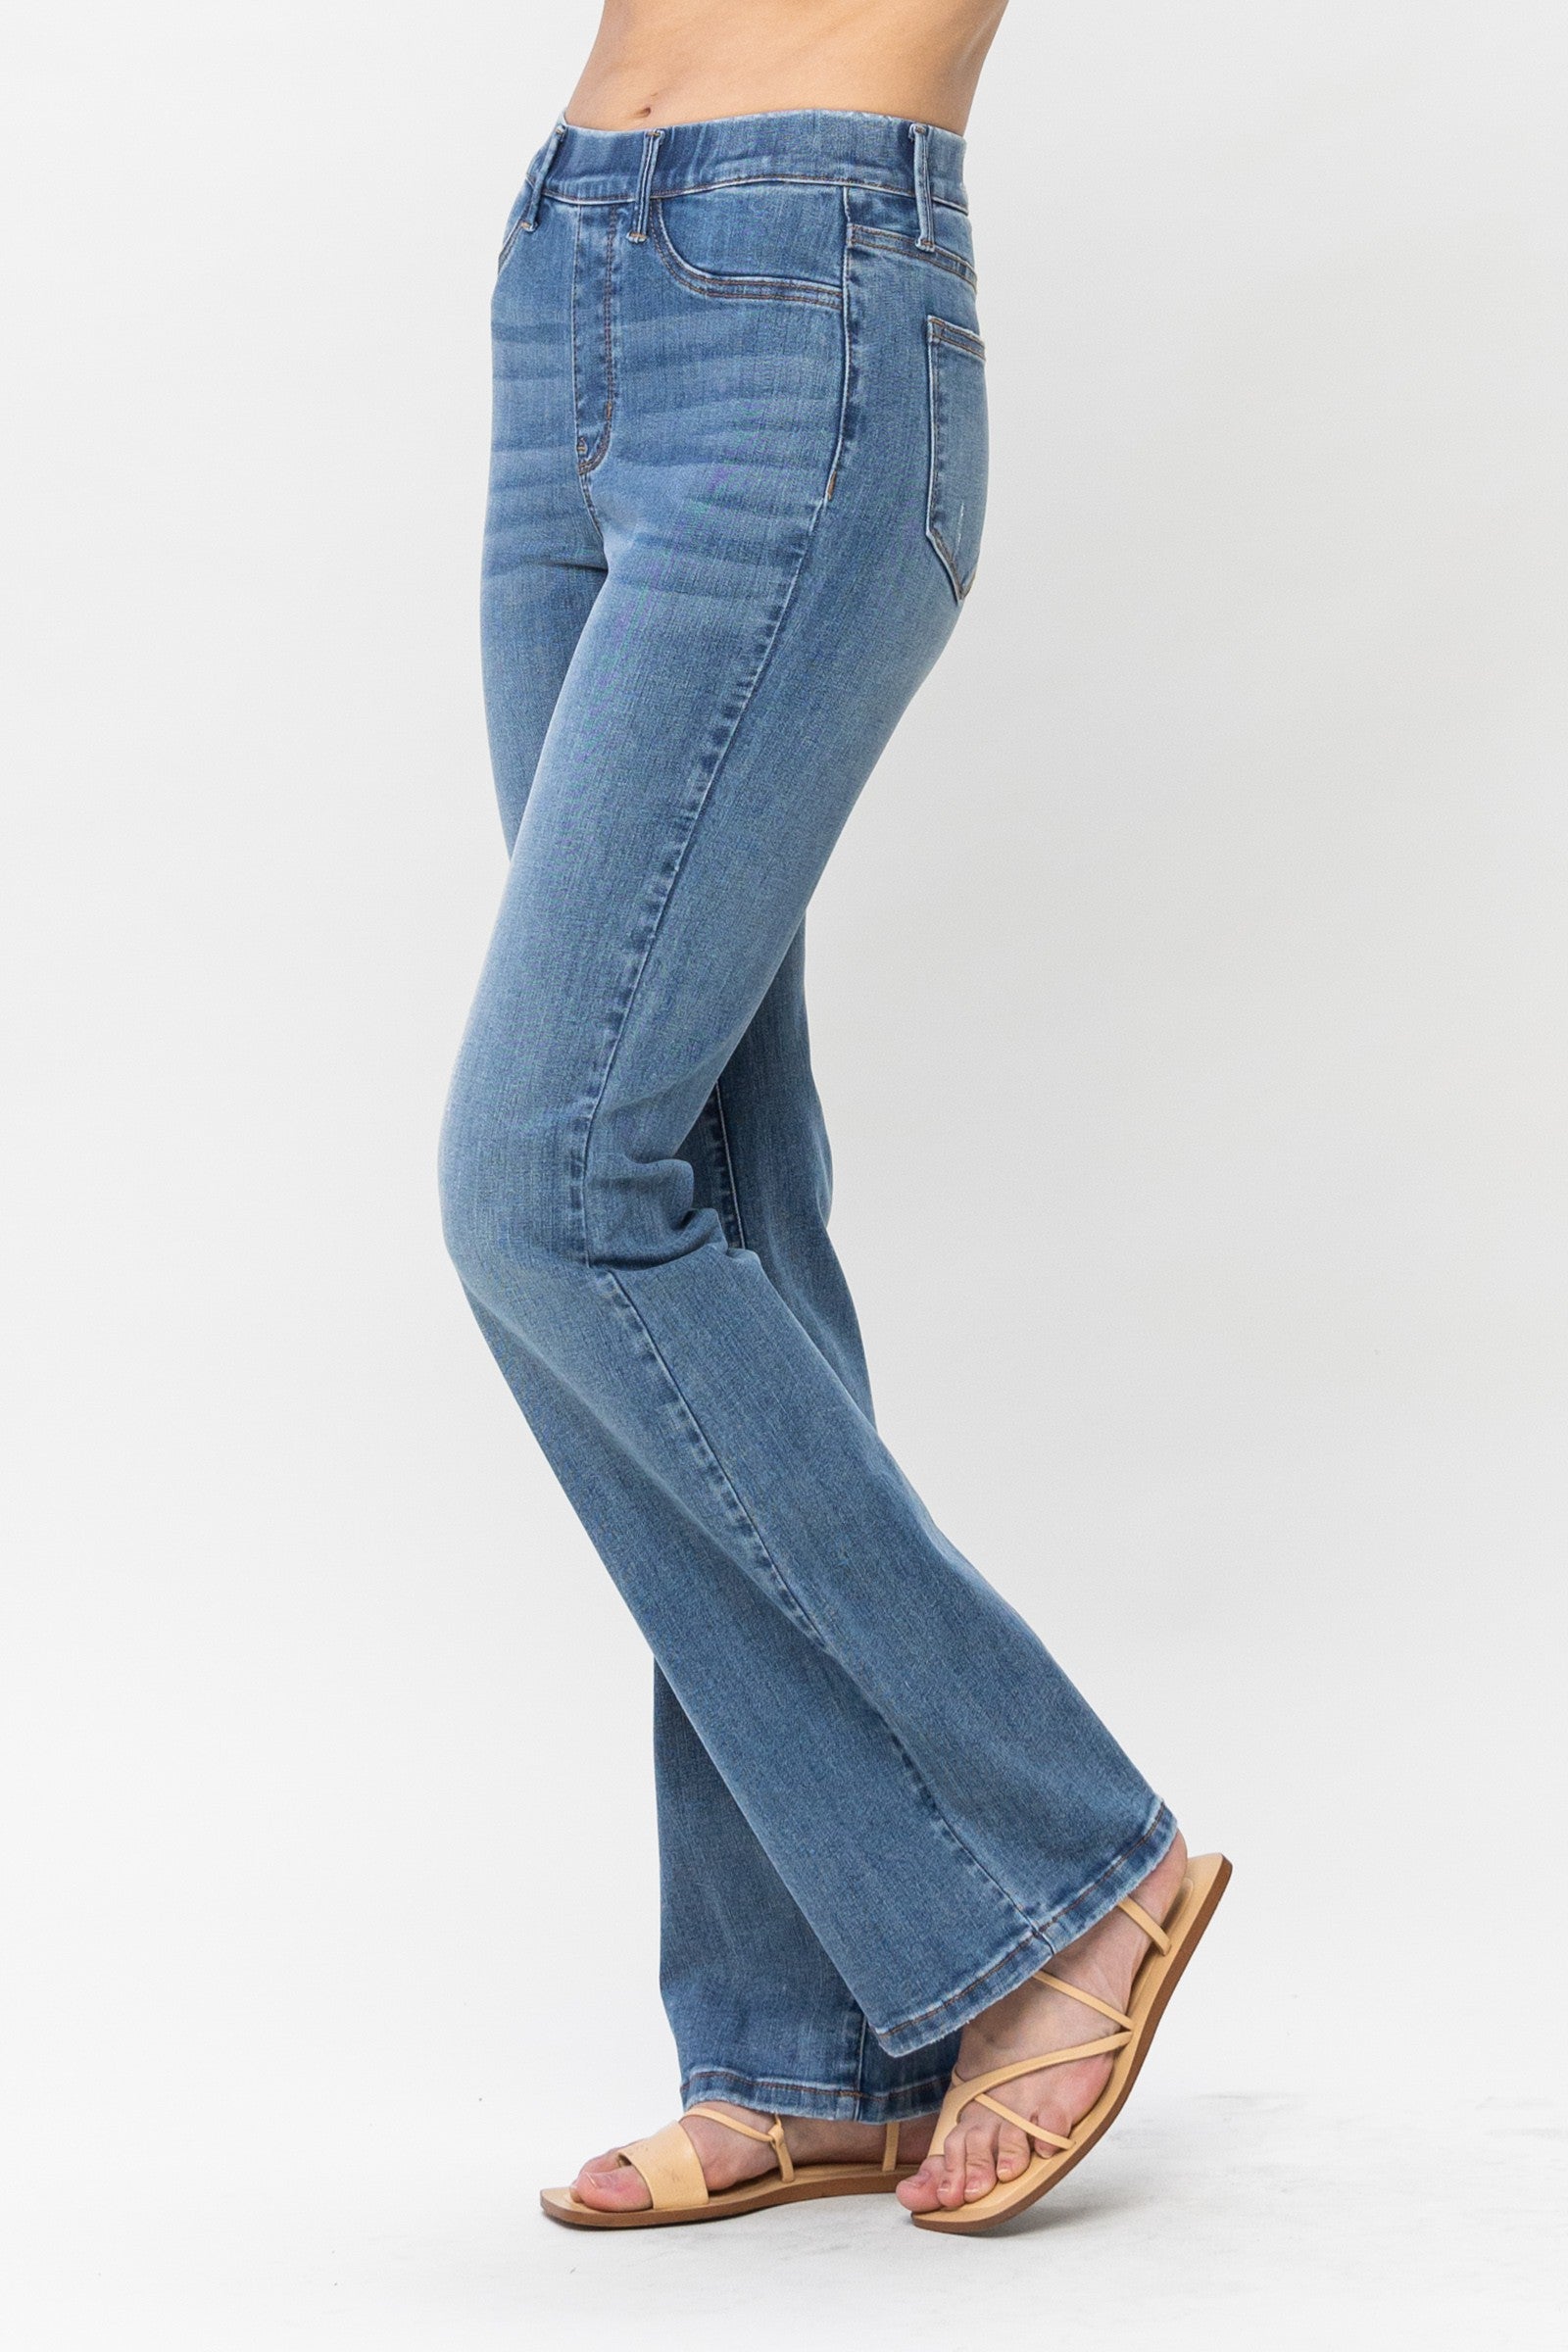 Judy Blue High Waist Pull on Slim Boot Cut Jeans